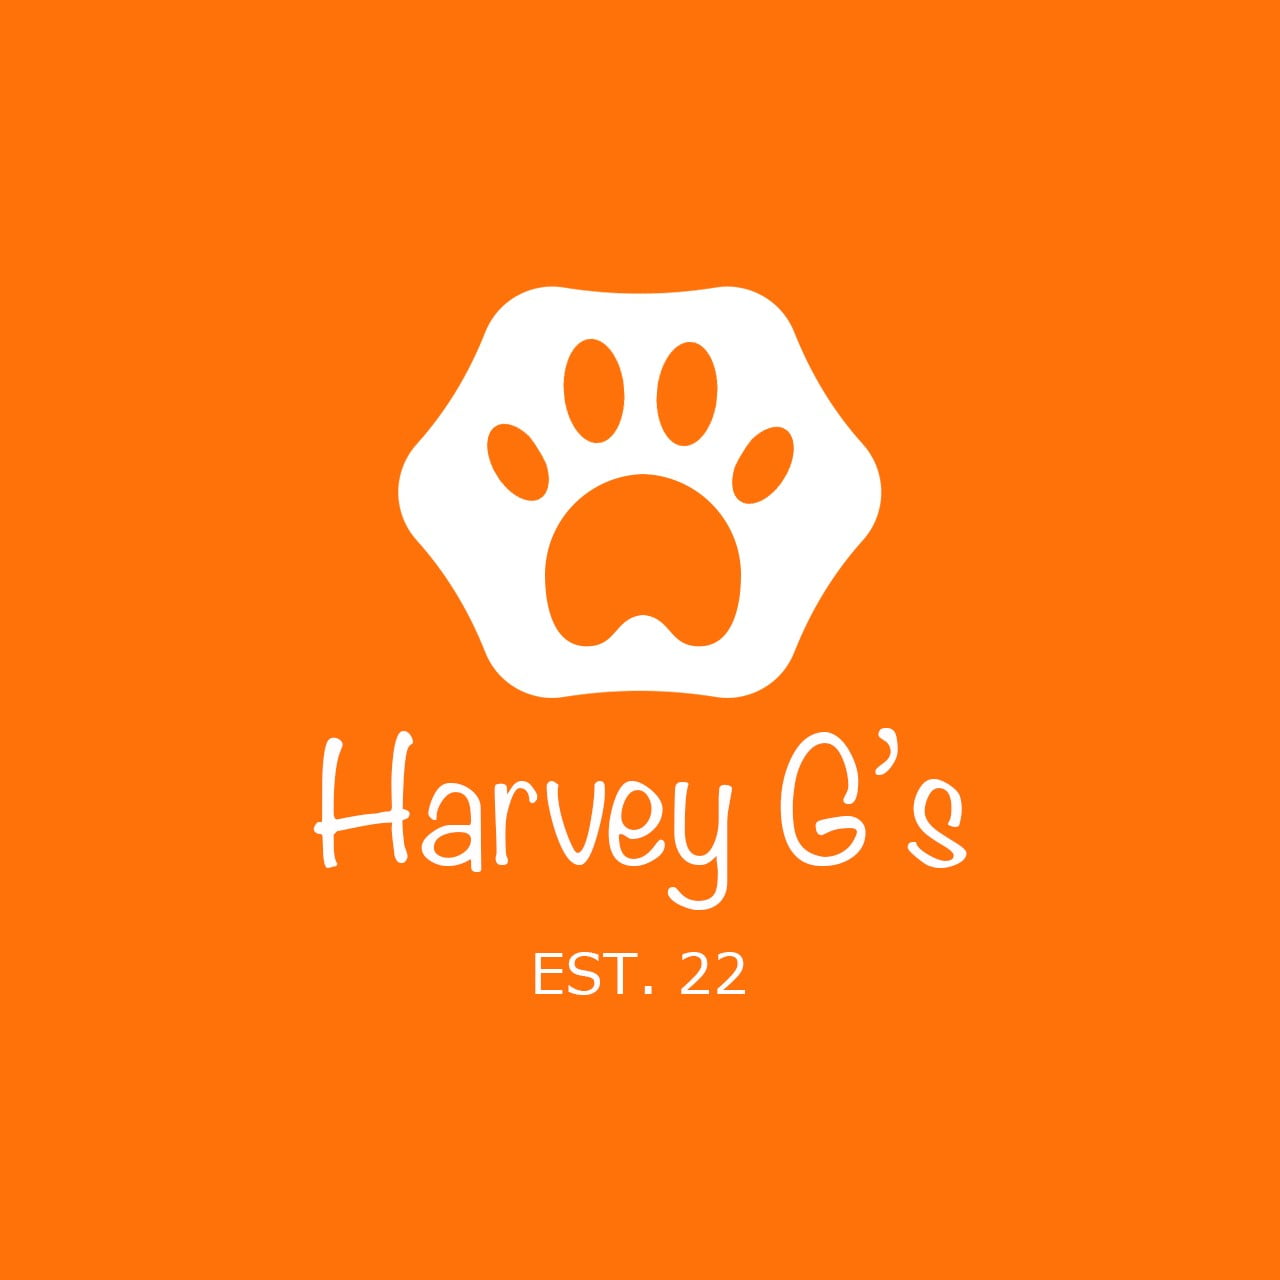 Harvey G’s